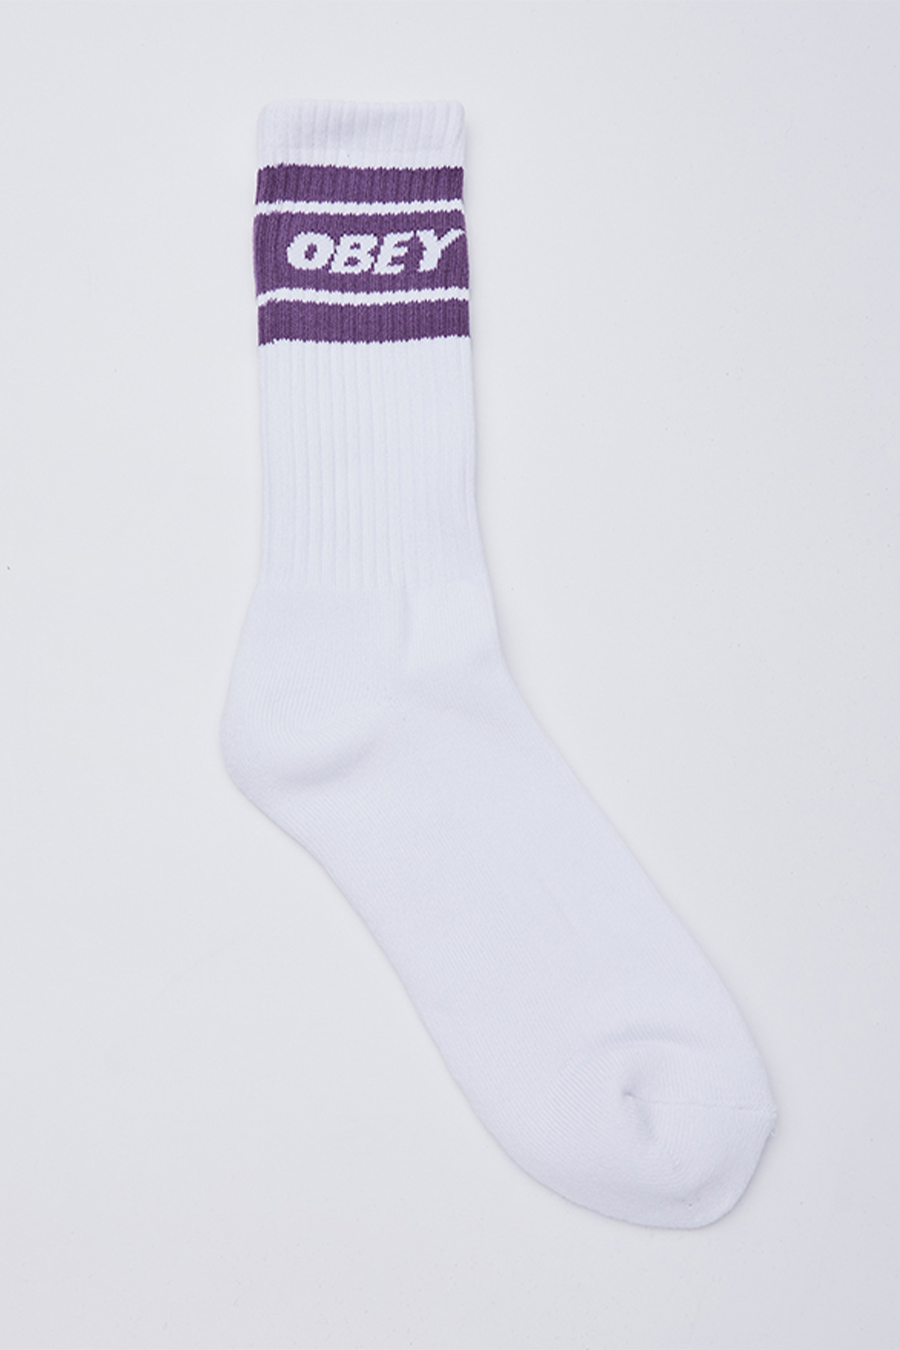 Cooper II Socks | White / Purple Nitro - Main Image Number 1 of 1